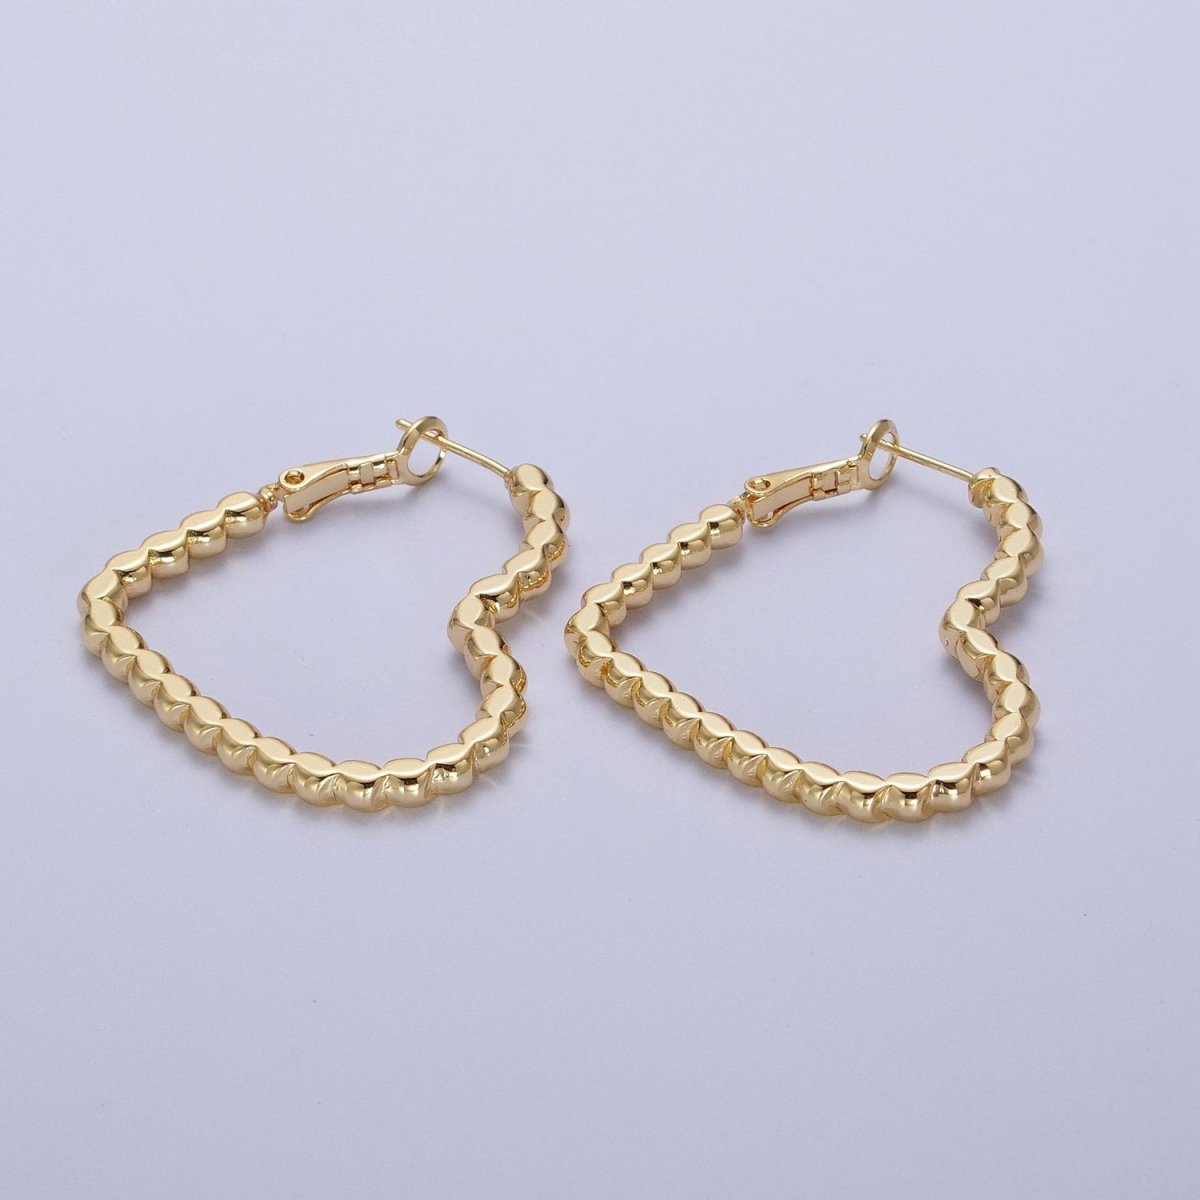 Modern Heart Hoop in Gold Beaded Earrings Medium Hoop For Everyday Wear Q-031 - DLUXCA